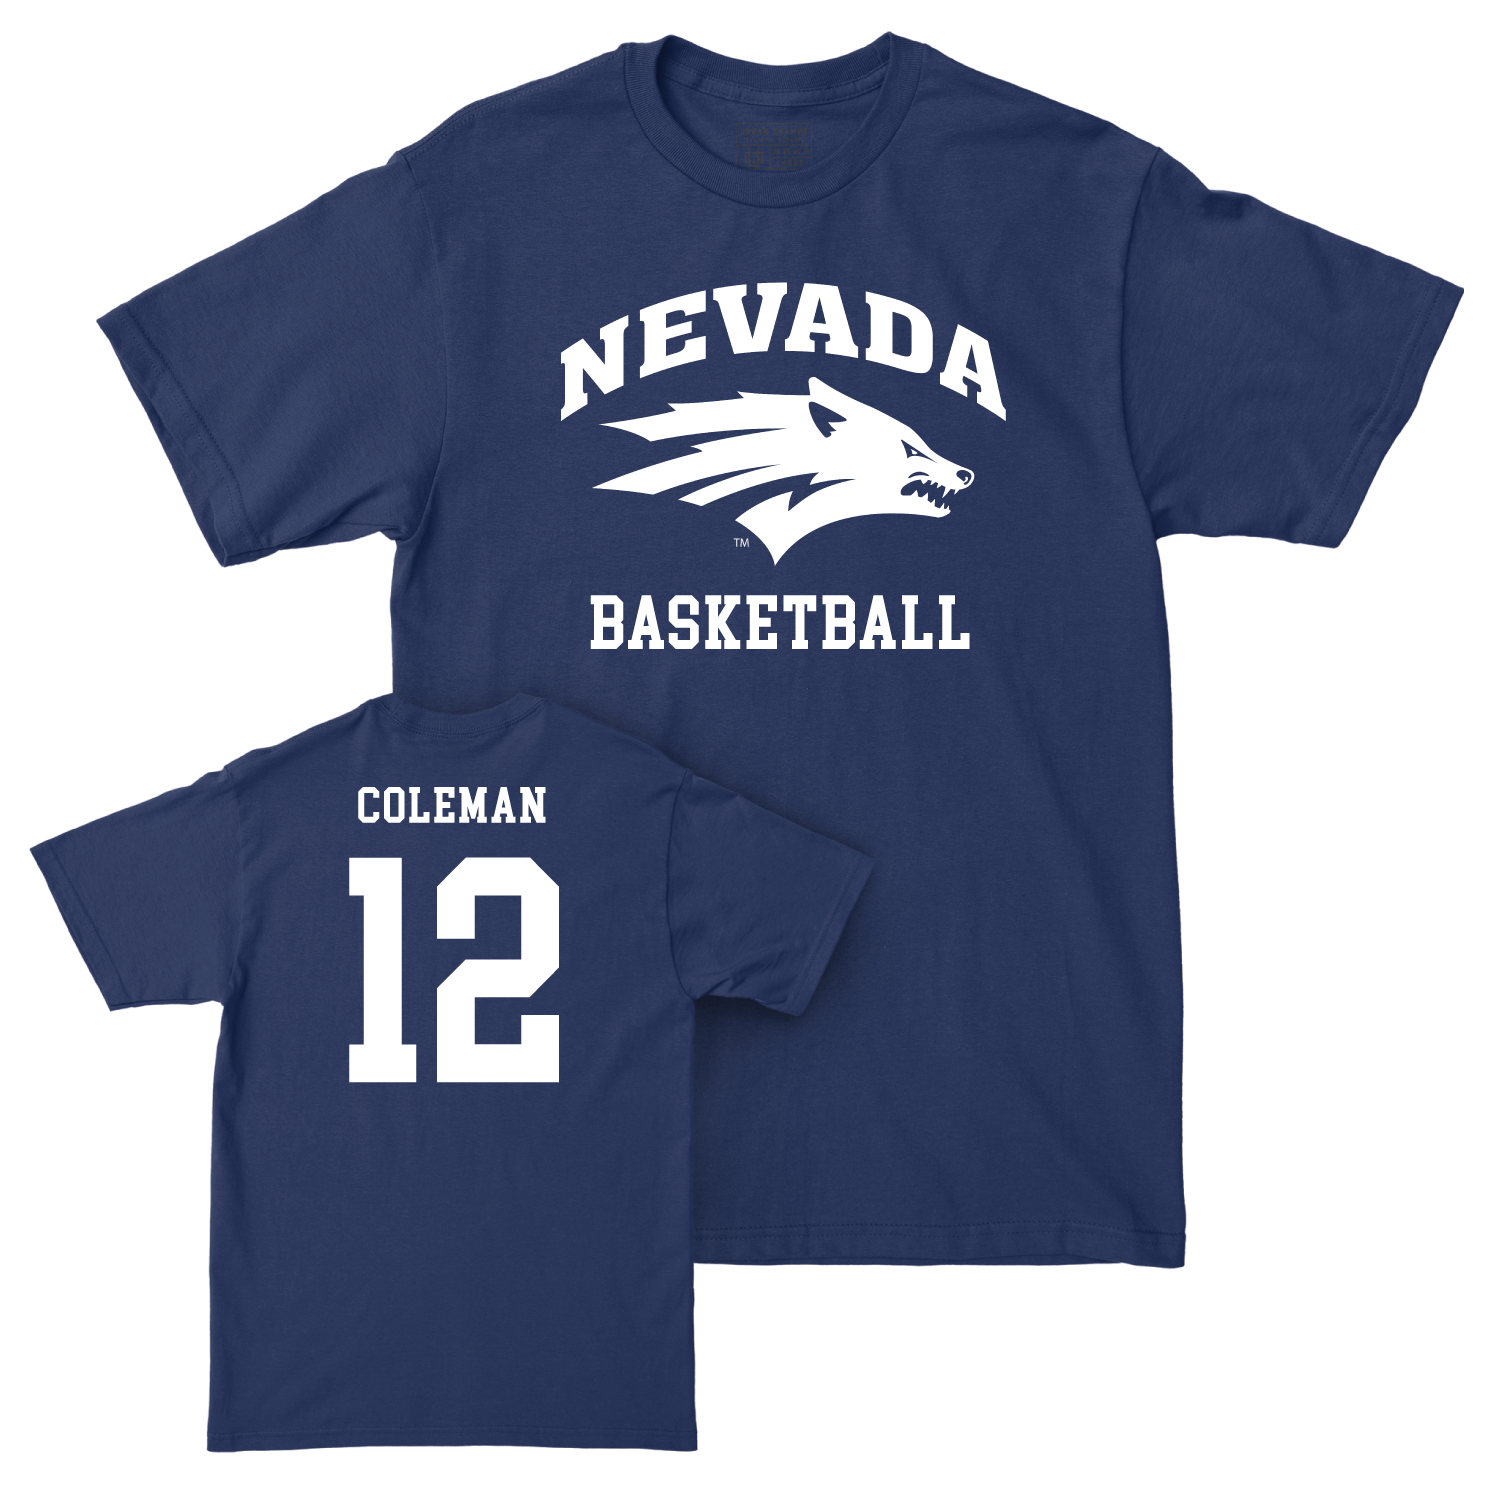 Nevada Men's Basketball Navy Staple Tee - Jeriah Coleman Youth Small